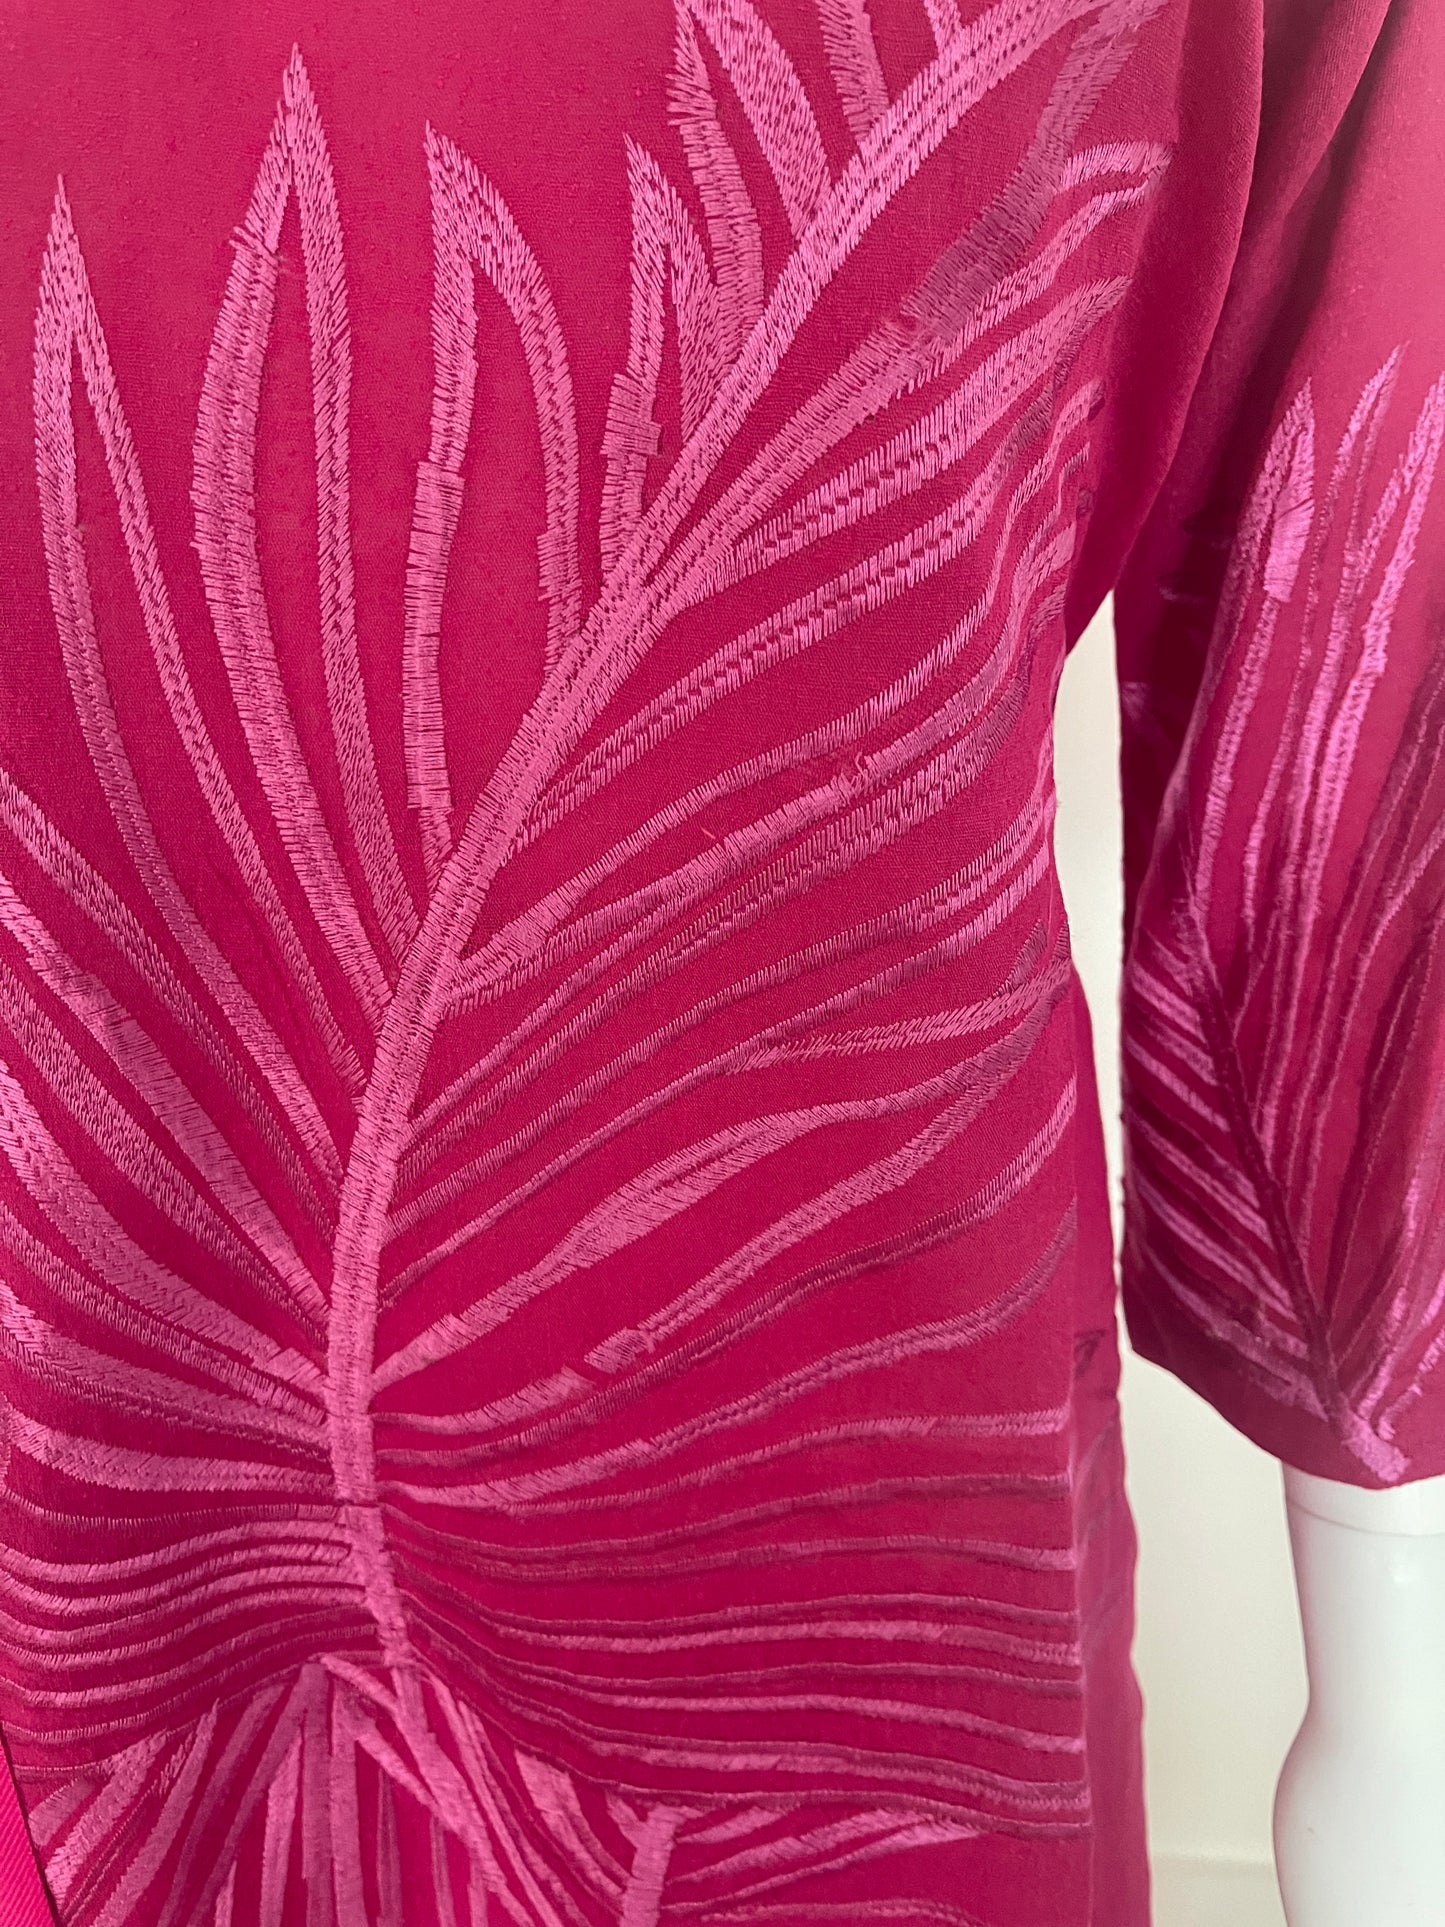 Shirt has gorgeous pink thread